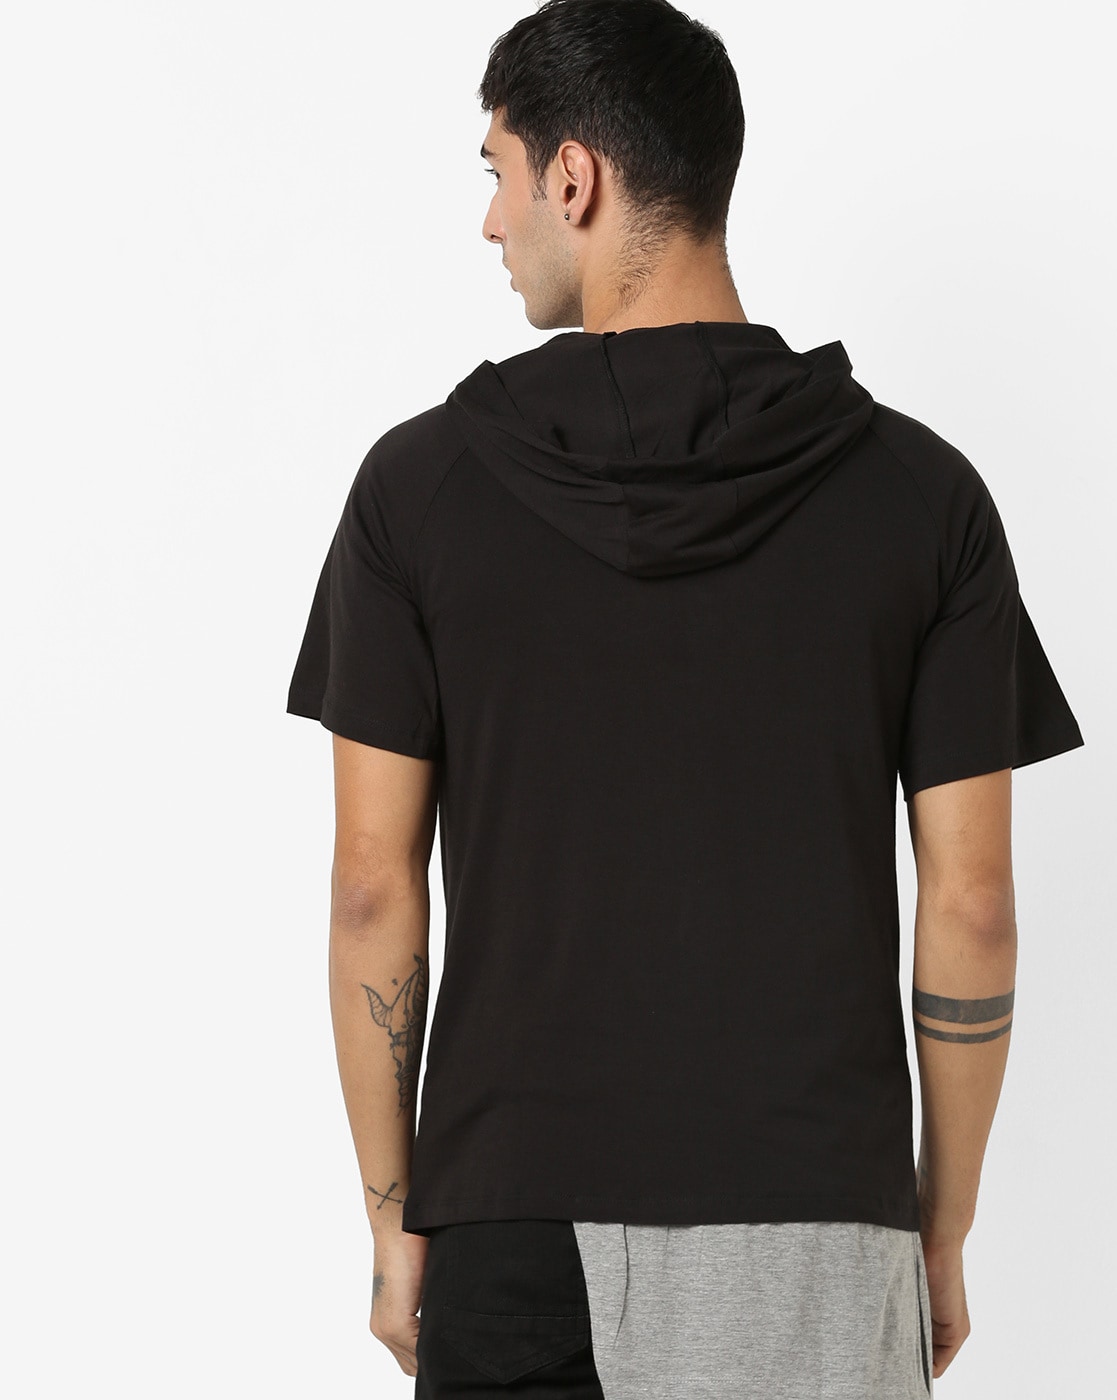 hooded t shirt black